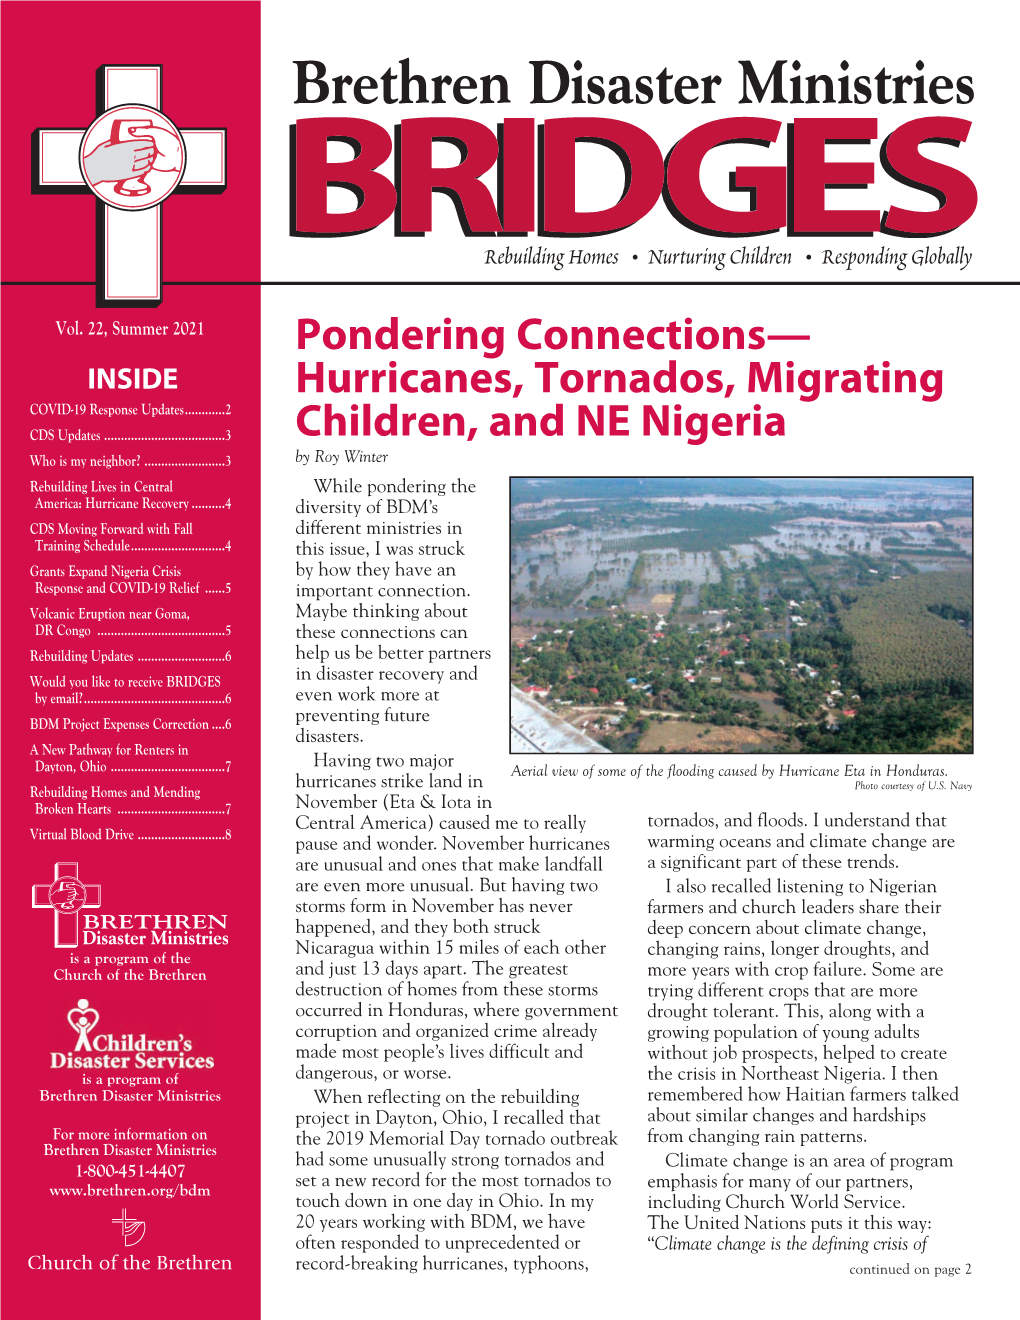 Bridges Summer 2021 Bridges Summer 2021 6/14/21 11:11 AM Page 1